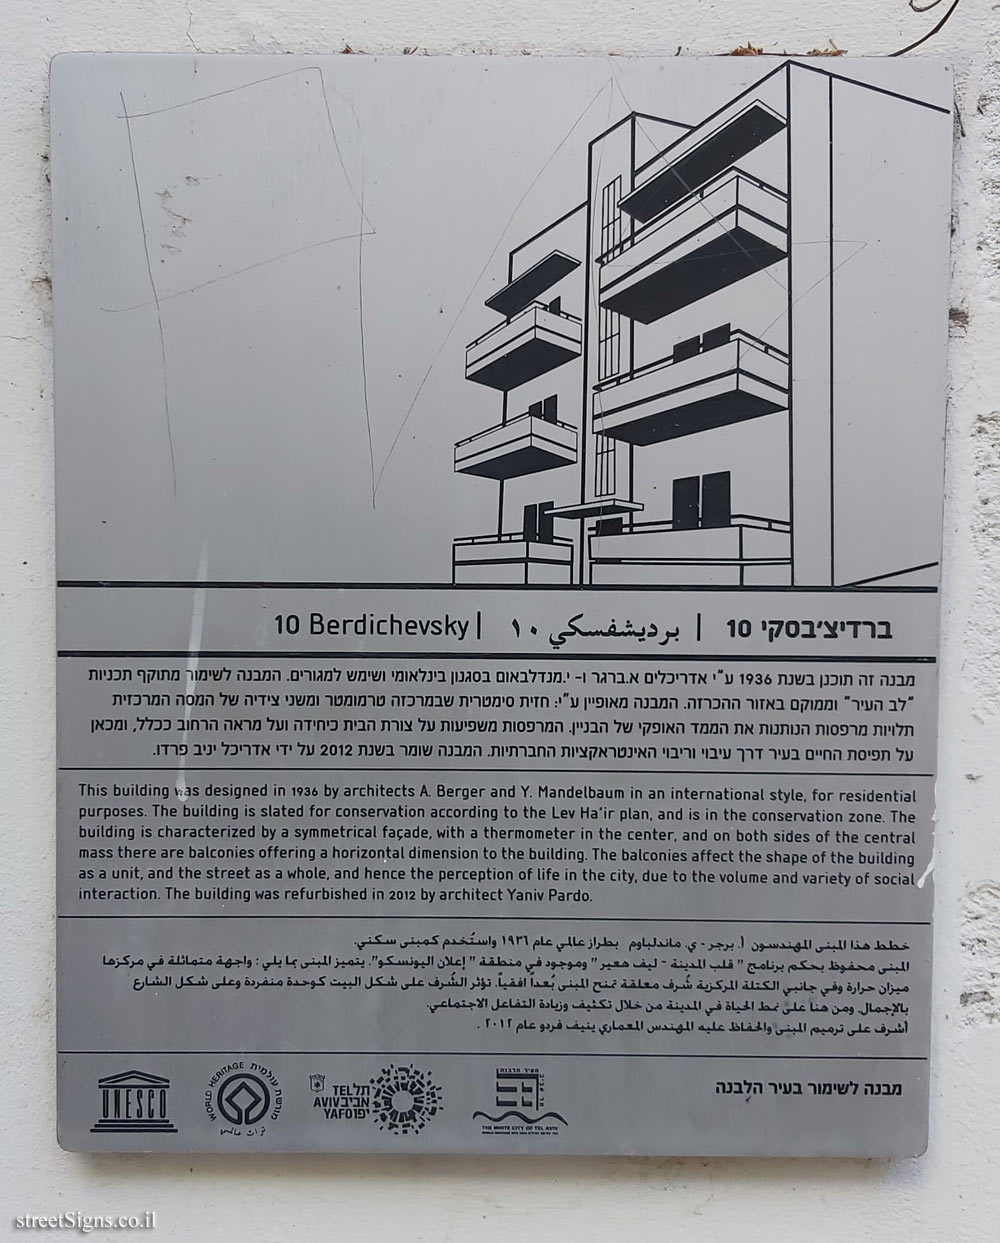 Tel Aviv - buildings for conservation - 10 Berdichevsky